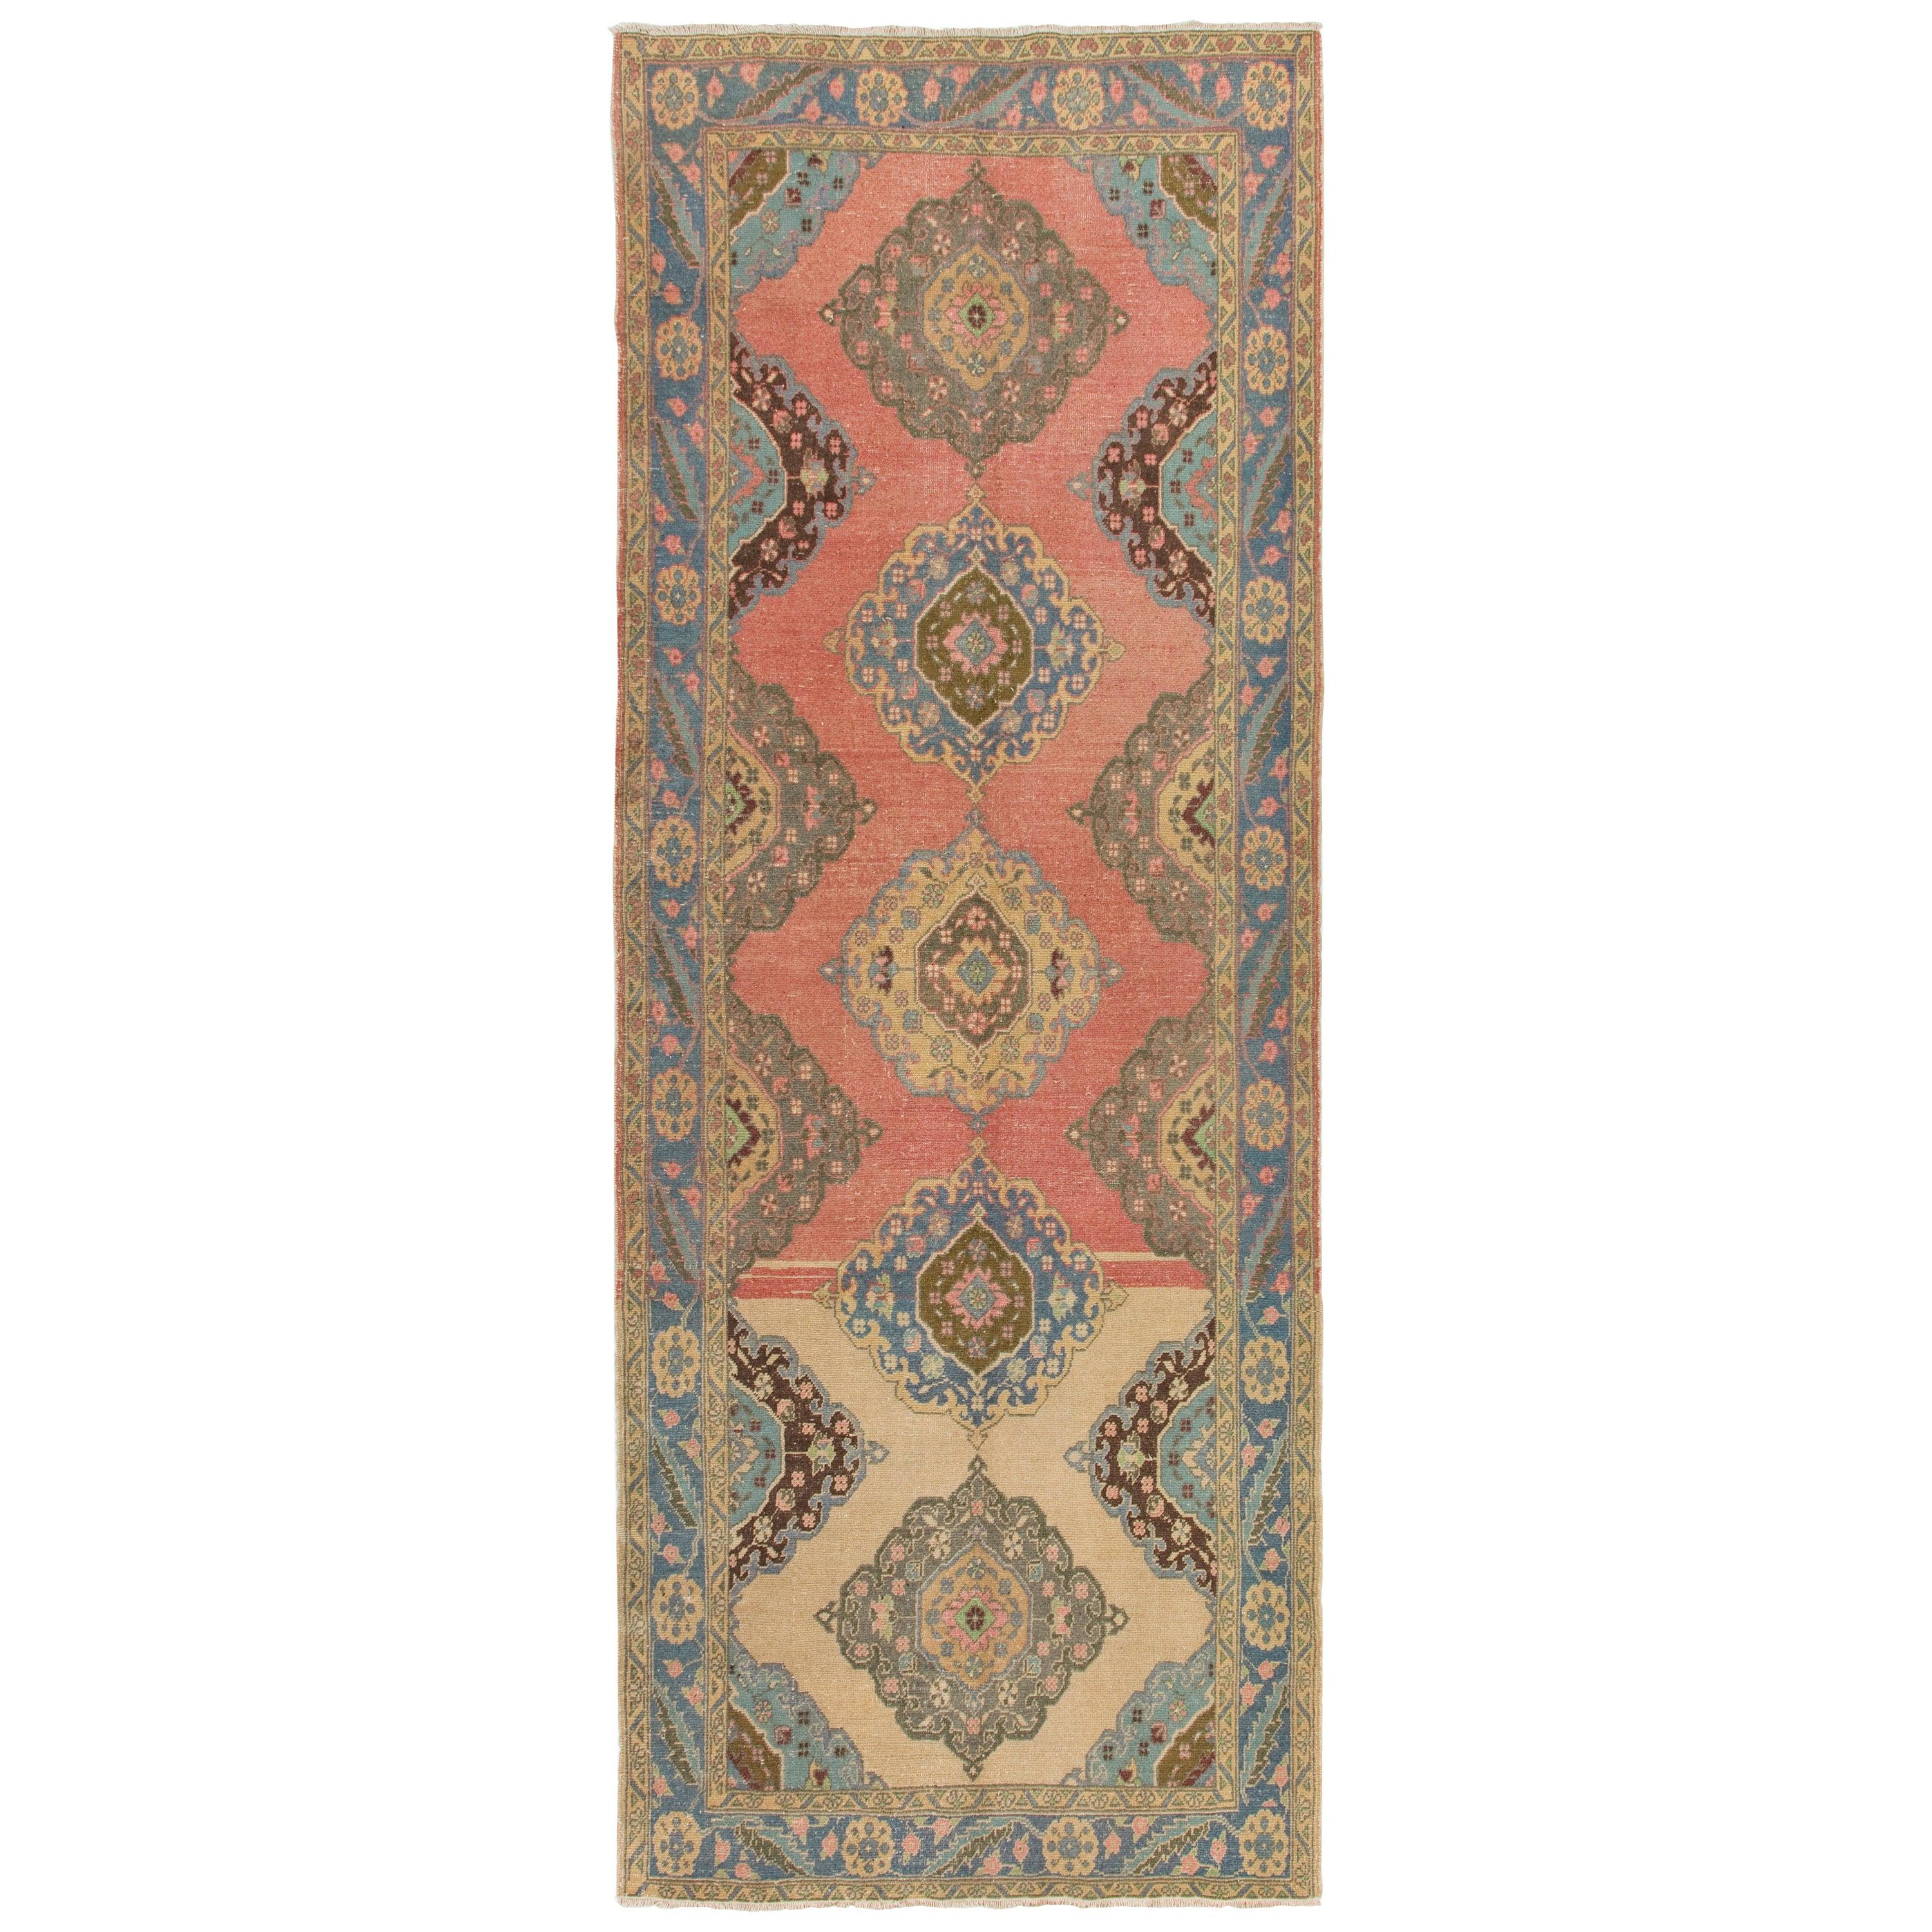 5x12.6 Ft Authentic Vintage Turkish Runner Rug. Handmade Wool Carpet for Hallway